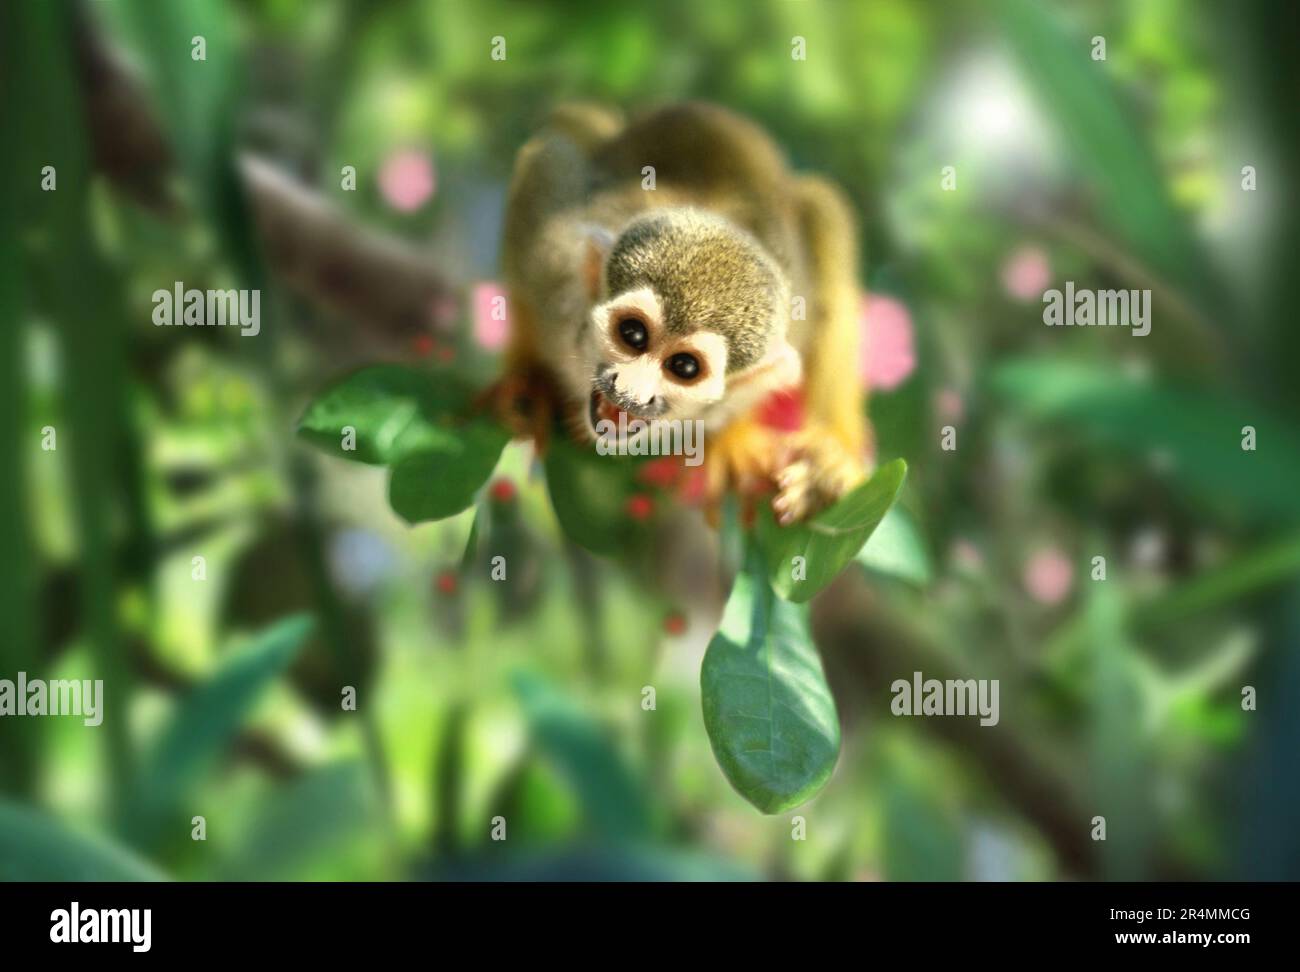 Squirrel monkey in Amazon jungle Stock Photo